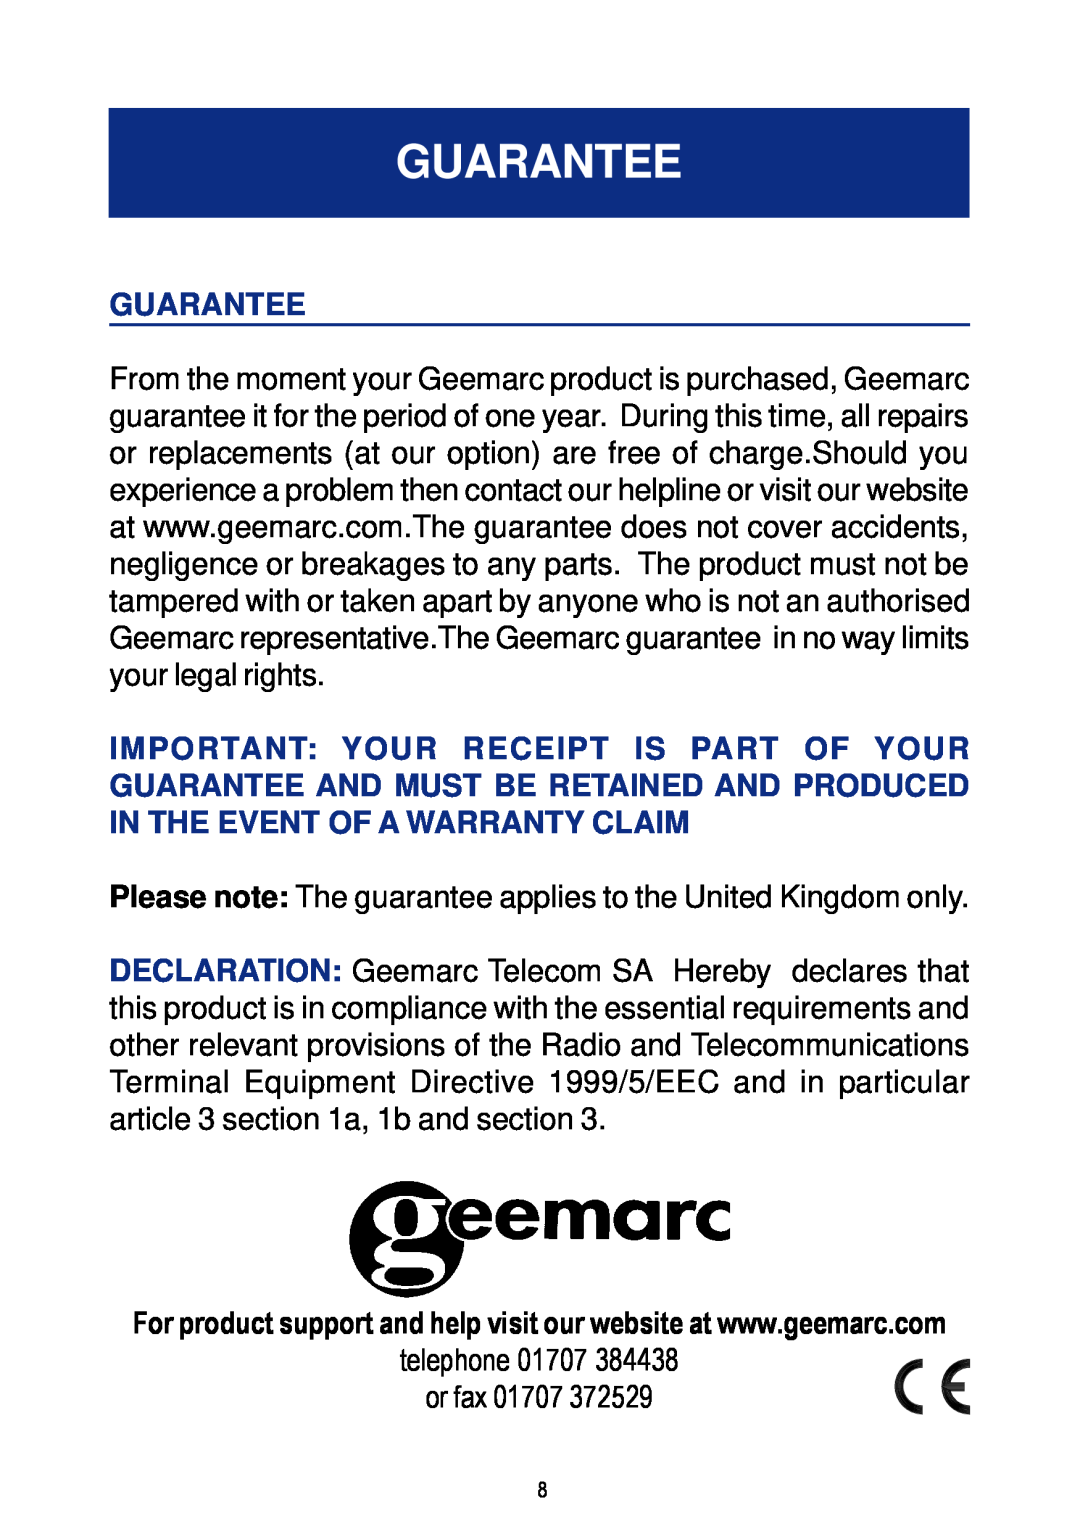 Geemarc CLA 1 manual Guarantee 